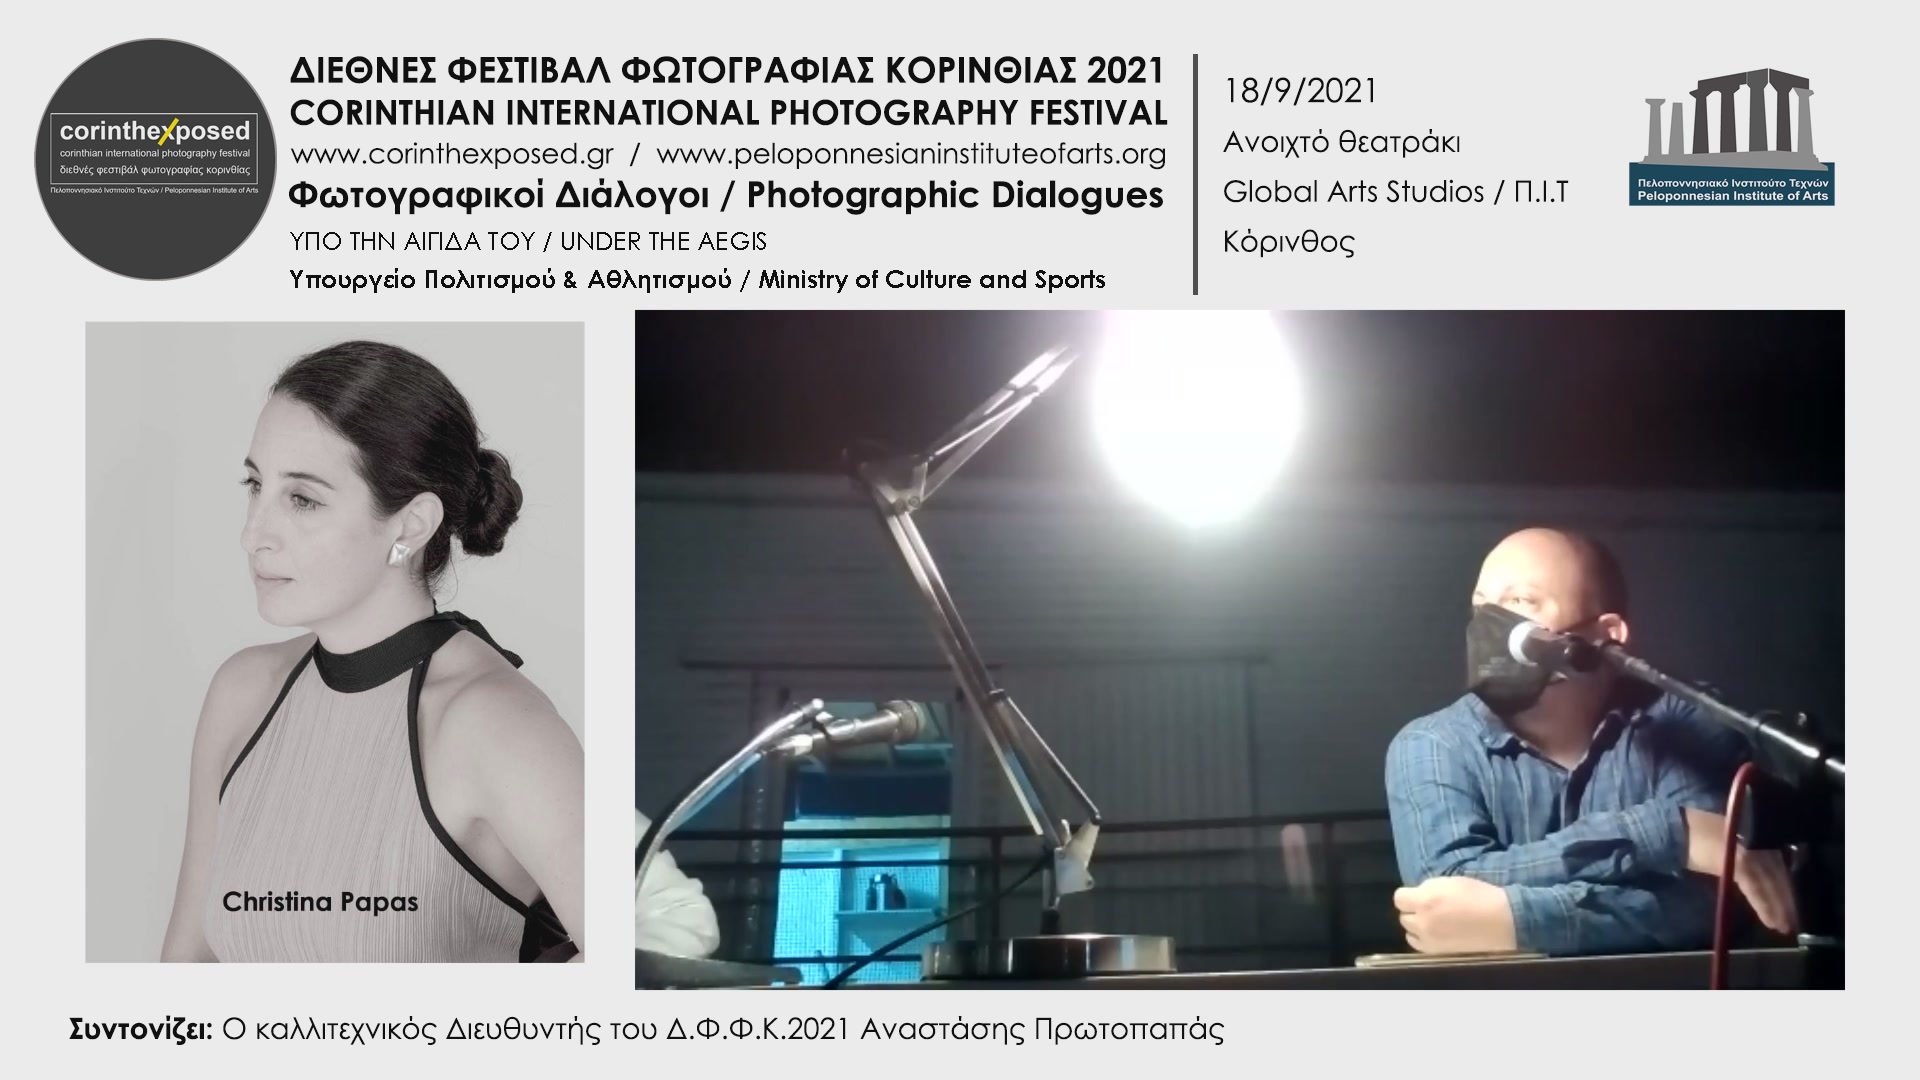 Christina Papas - Photographic dialogs 2021 (video)